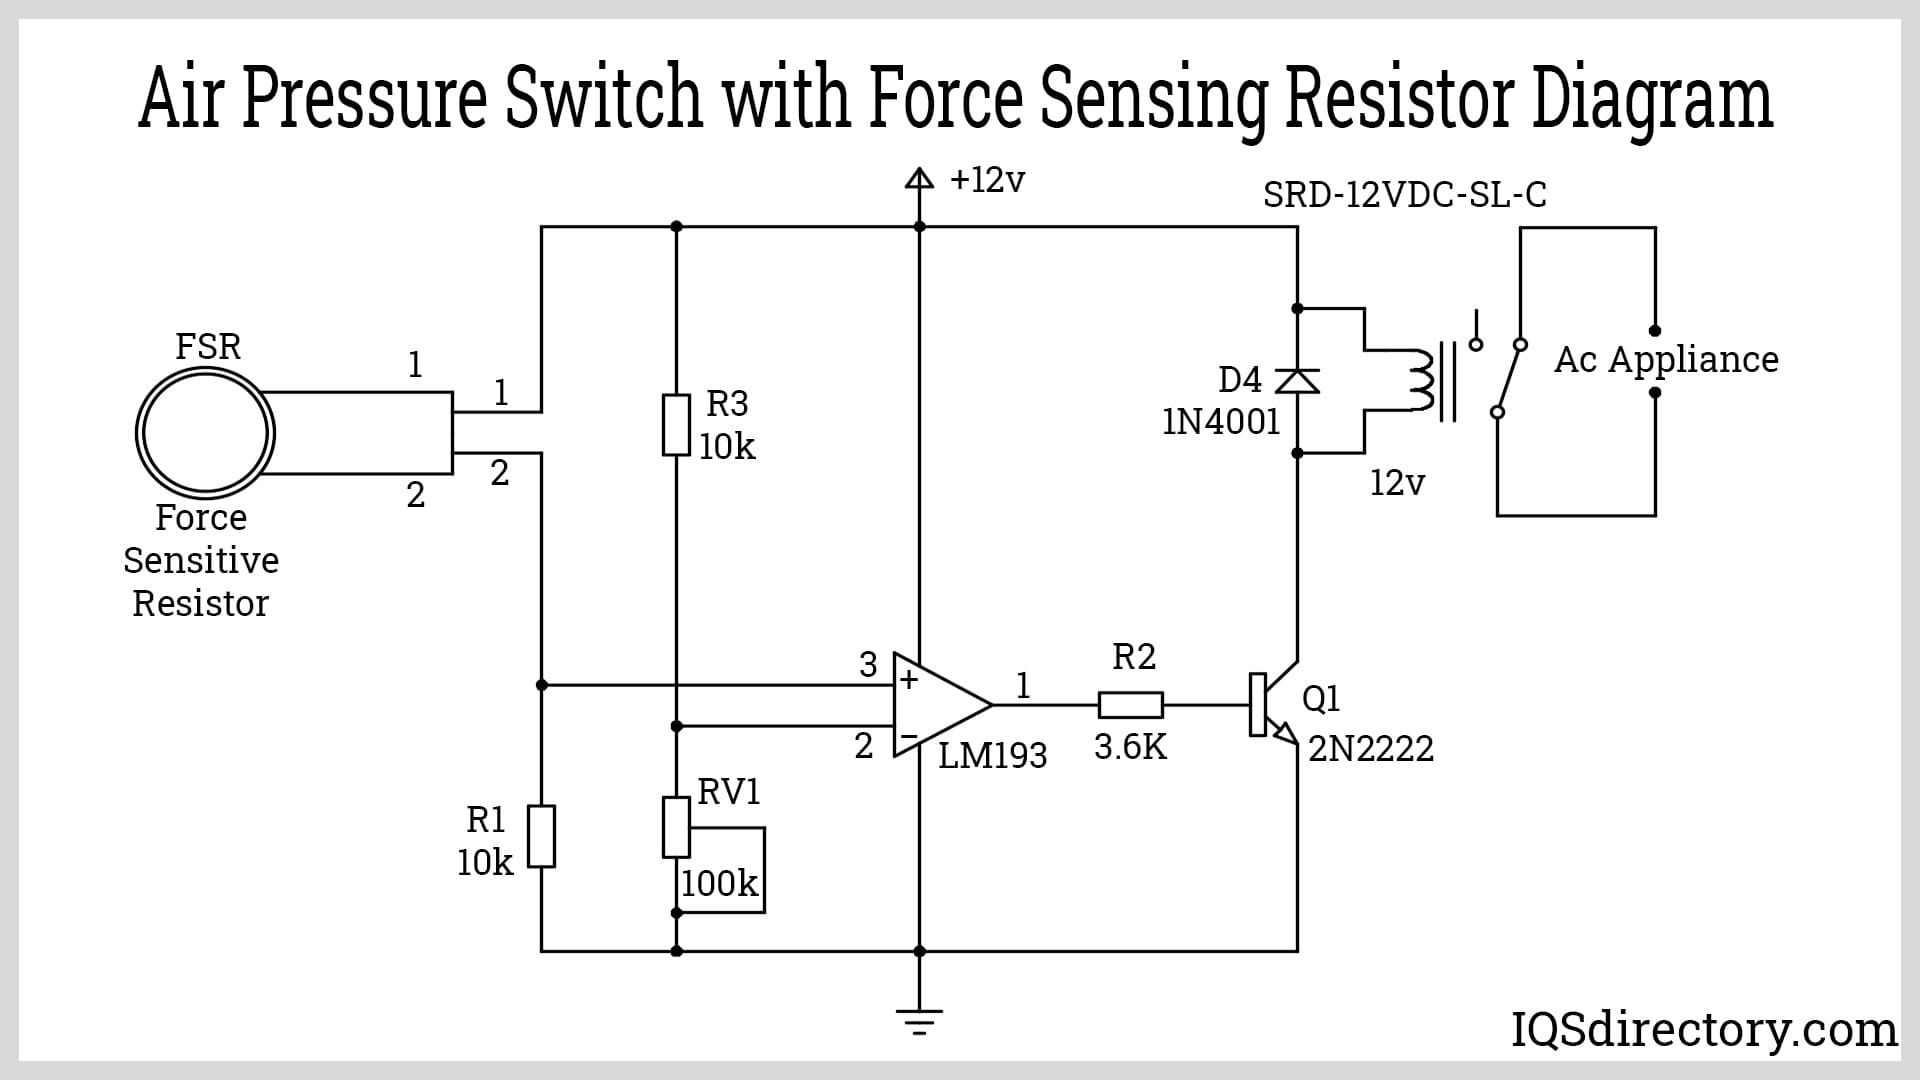 Air Pressure Switch with Force Sensing Resistor Diagram